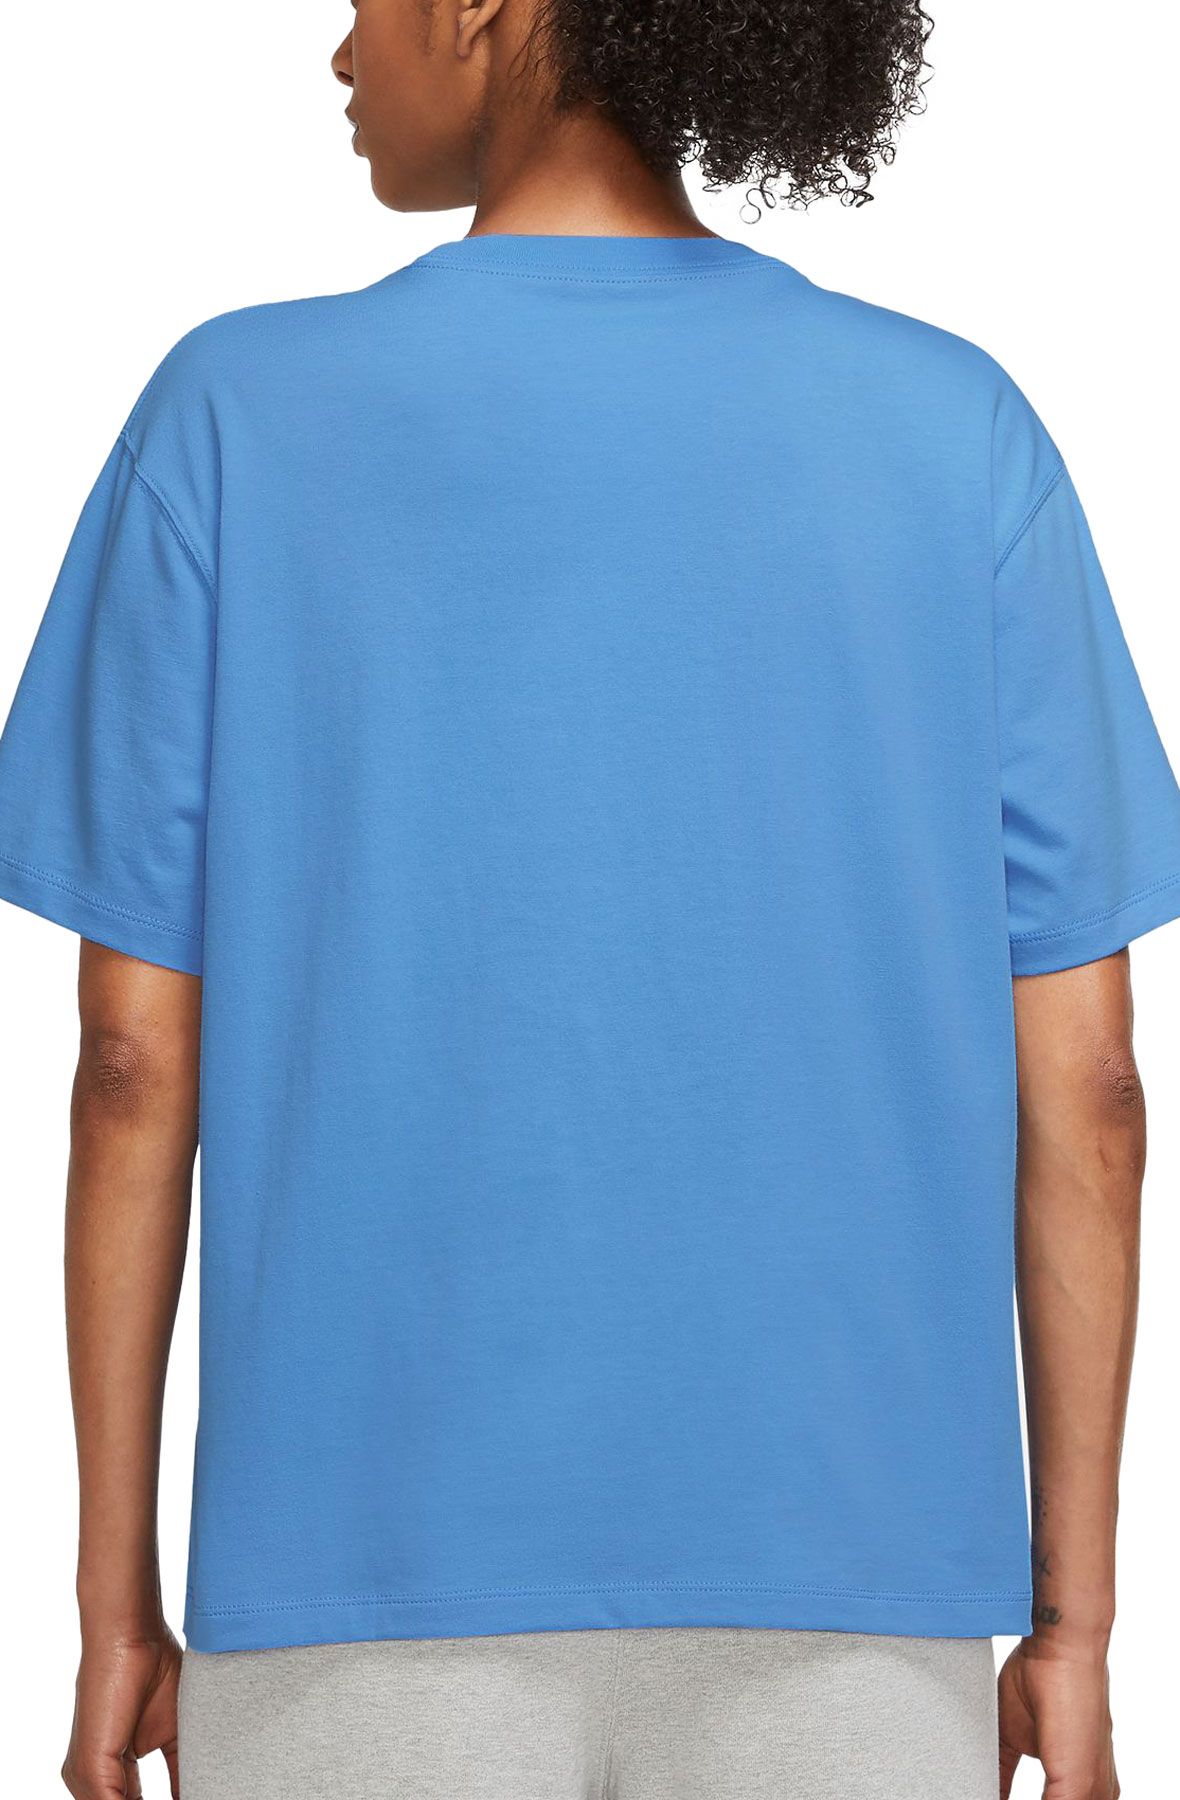 Jumpman Air Jordan T-Shirt - White/University Blue – Feature